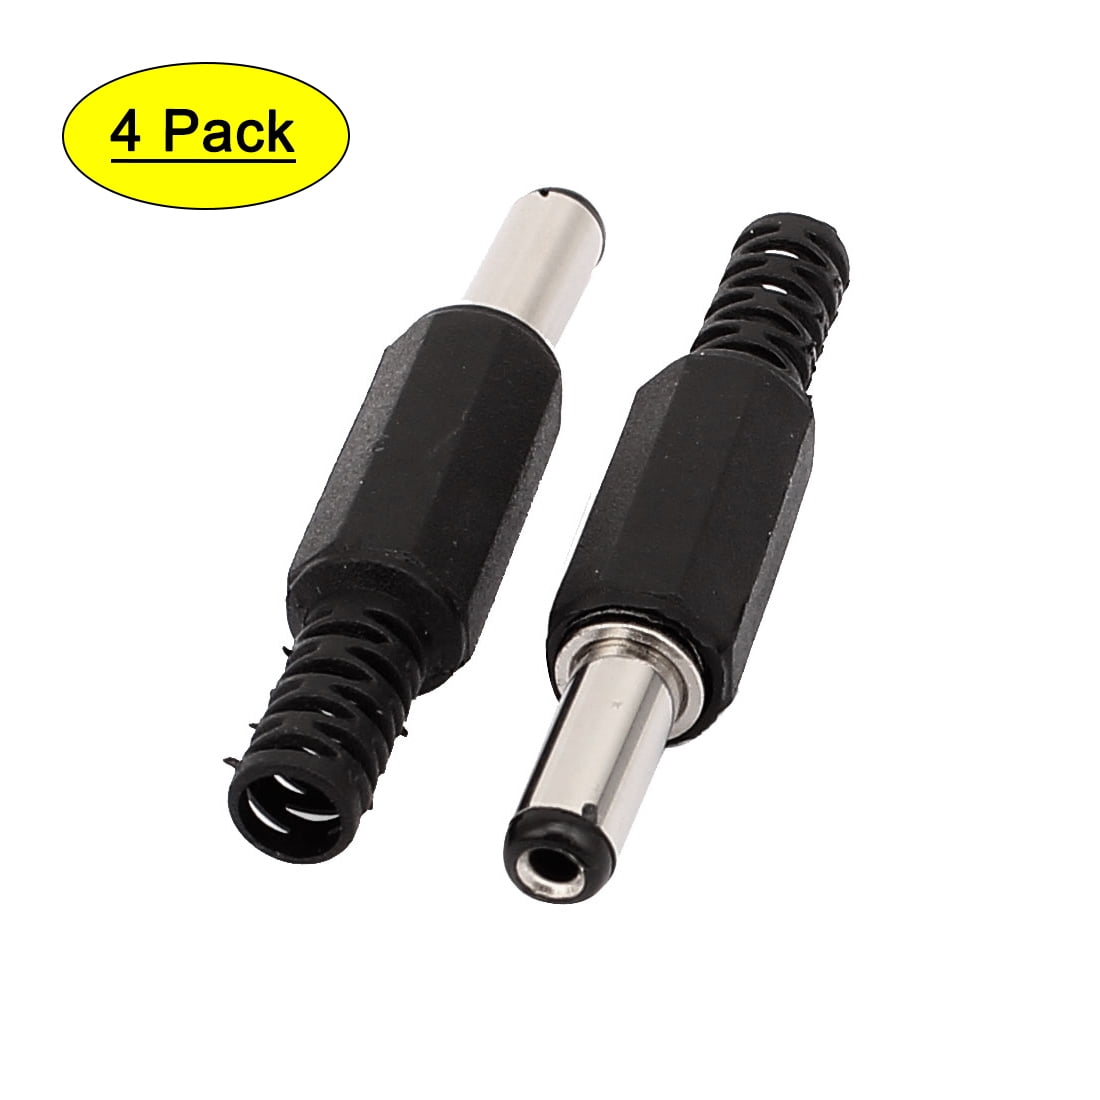 2 x  Male DC Power Jack Connector 5.5x 2.1mm Barrel Tip Plug 